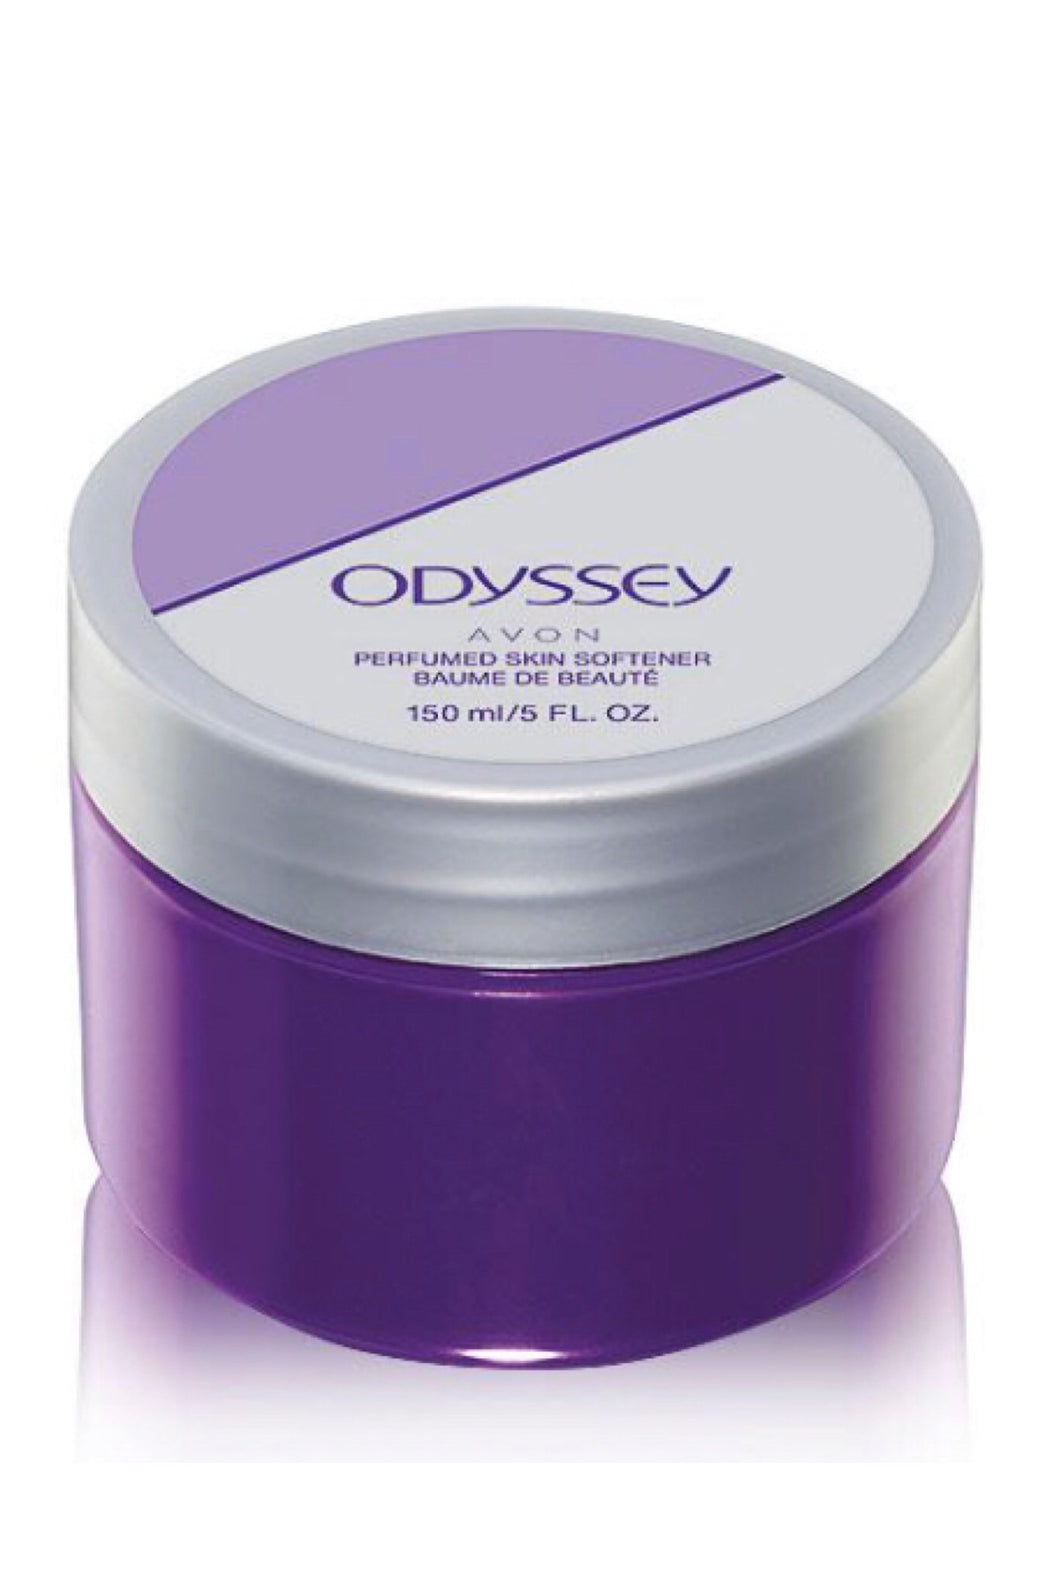 Odyssey Perfumed Skin Softener 150ml